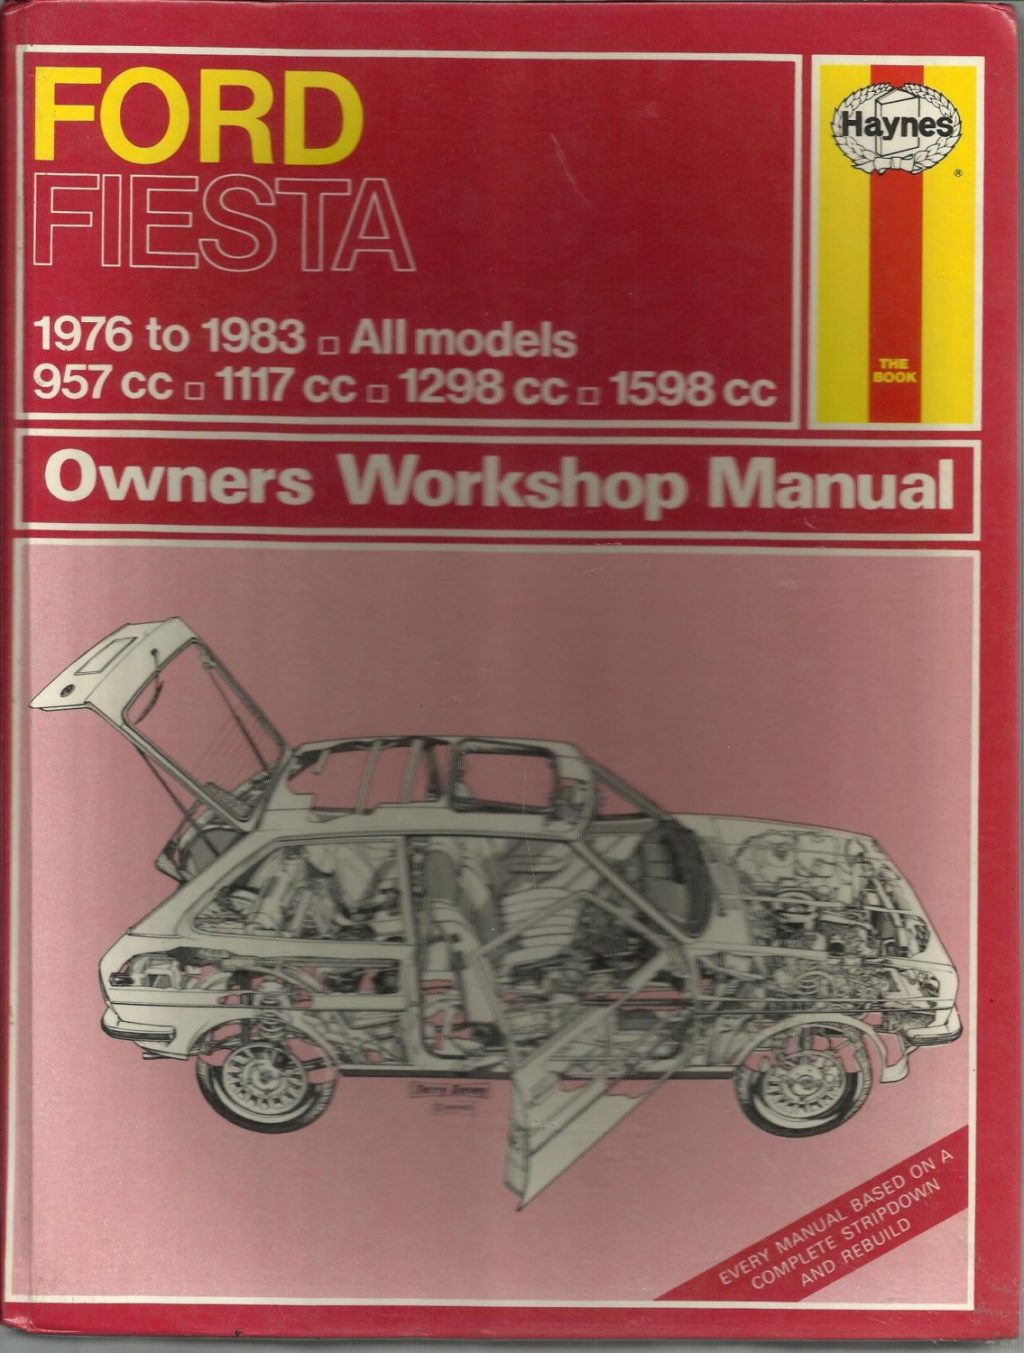 Ford Fiesta Owner’s Workshop Manual / Car Handbook – 1976 to 1983 / EVE